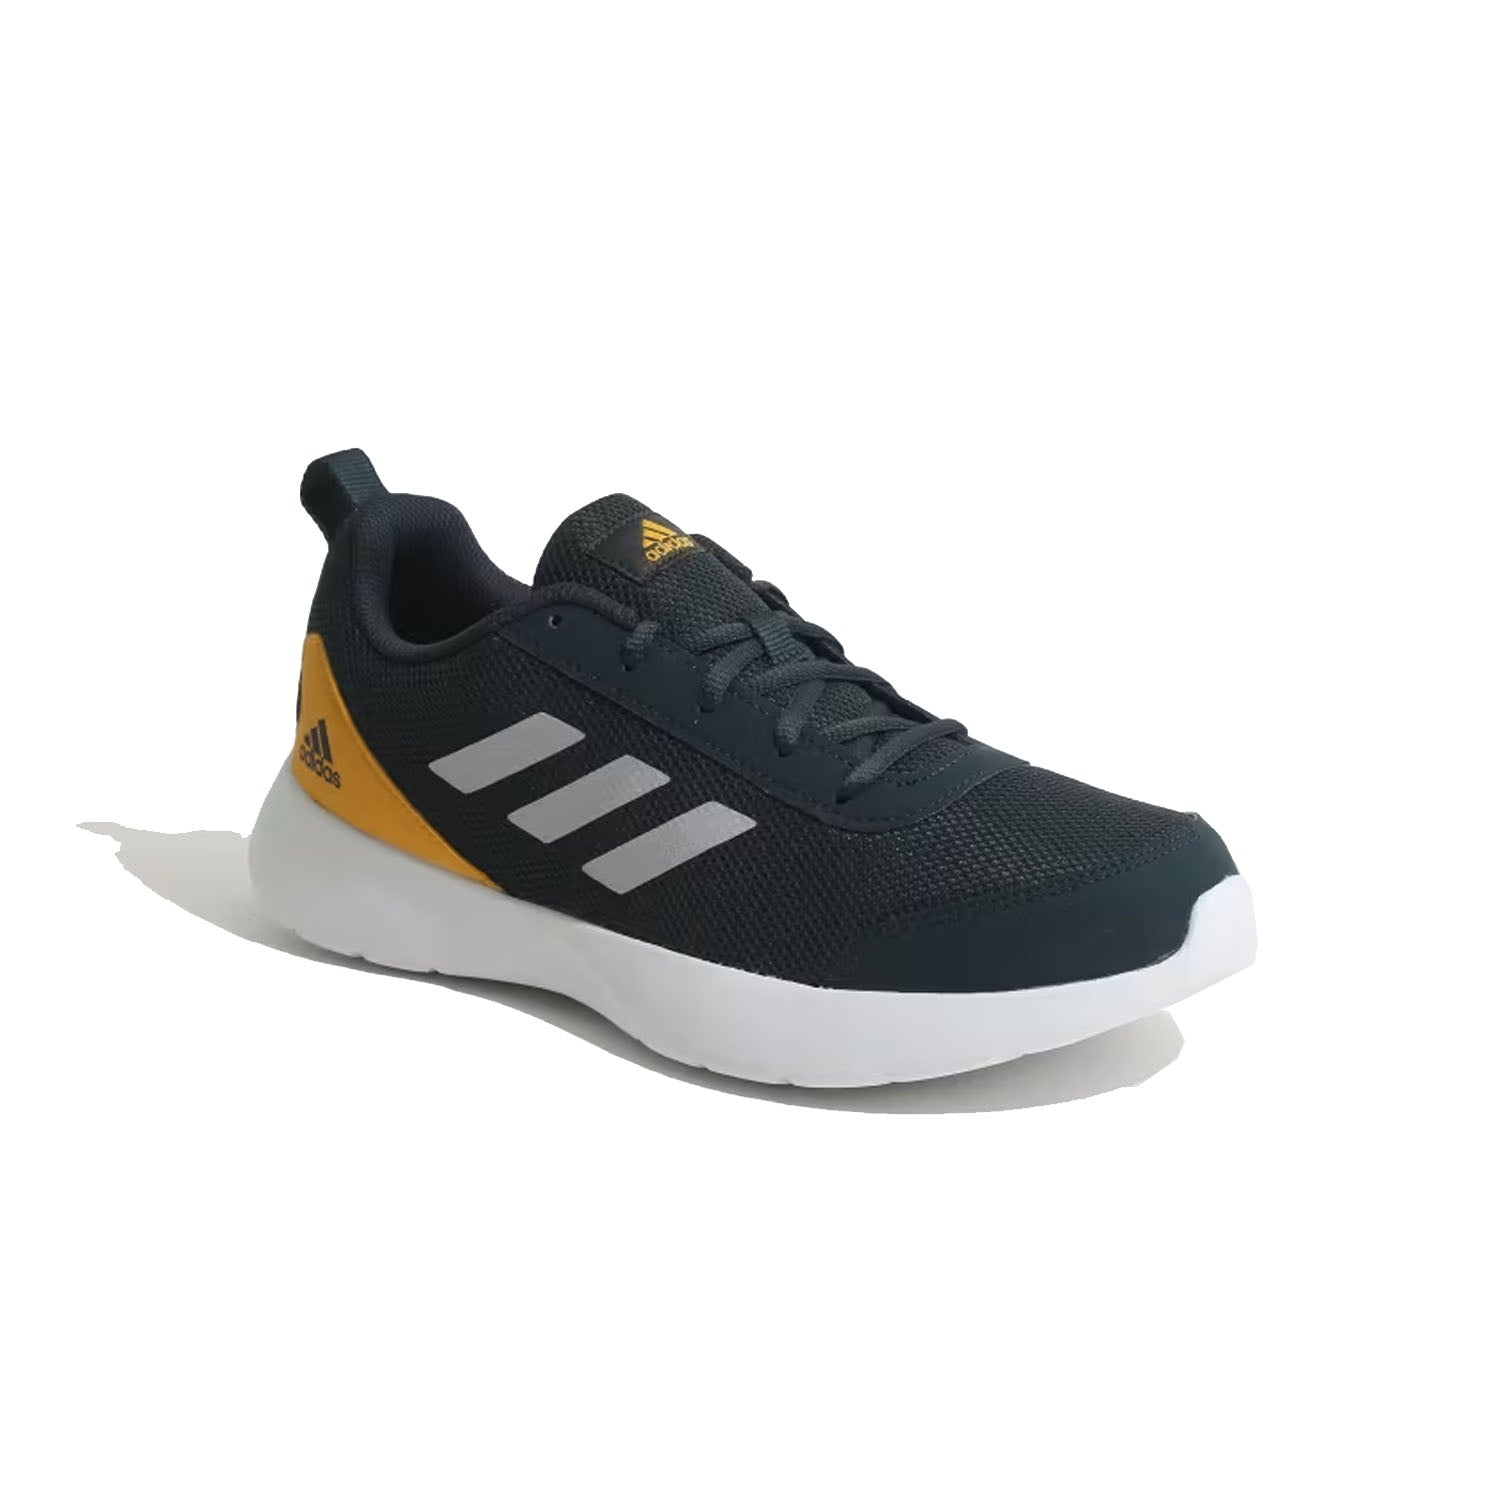 Adidas Questeron Running Shoes - Best Price online Prokicksports.com